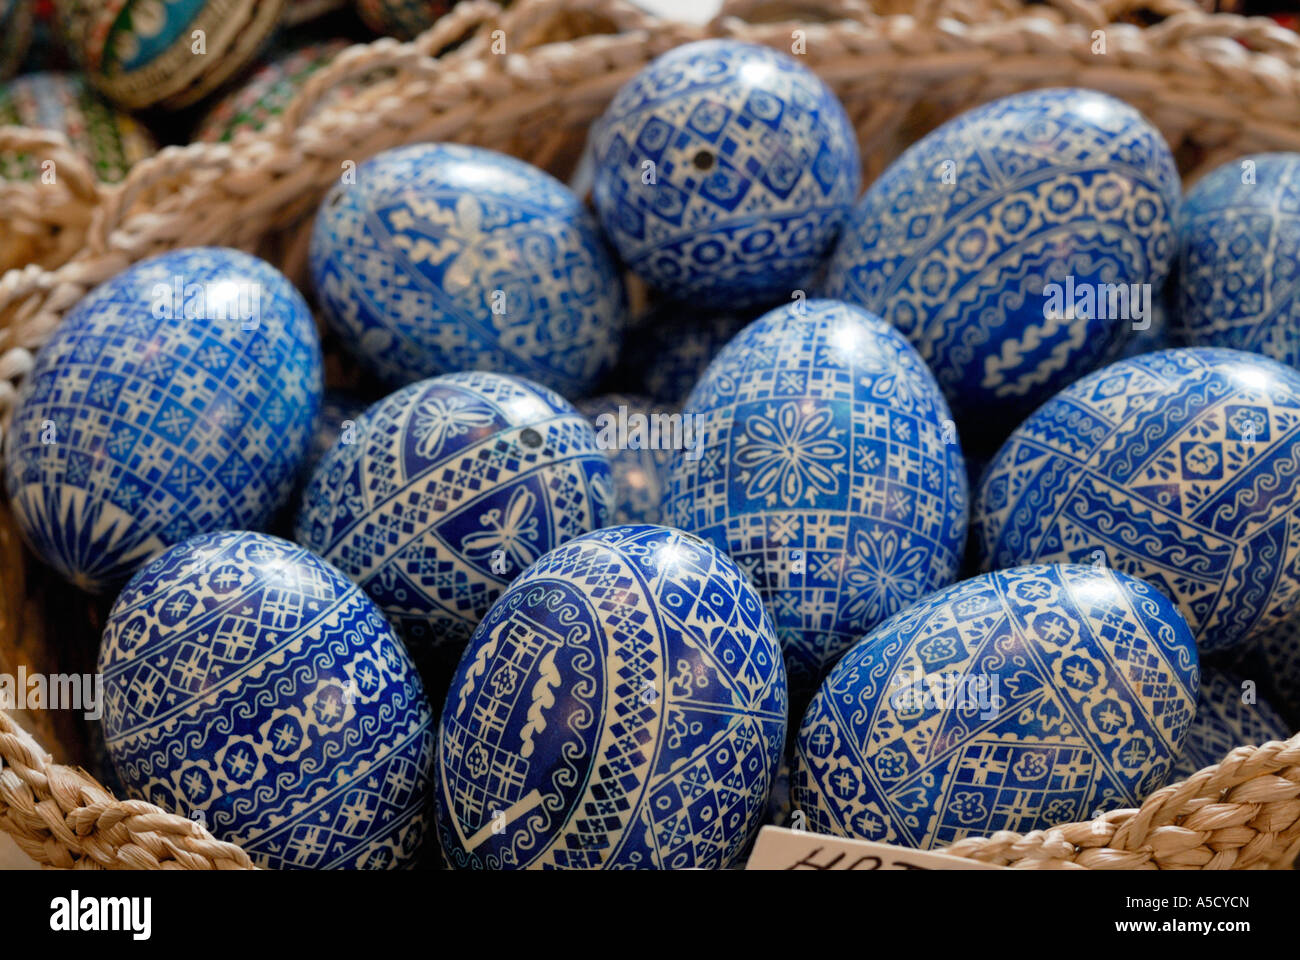 Painted egg shells in a souvenir shop. Sibiu, Romania Stock Photo